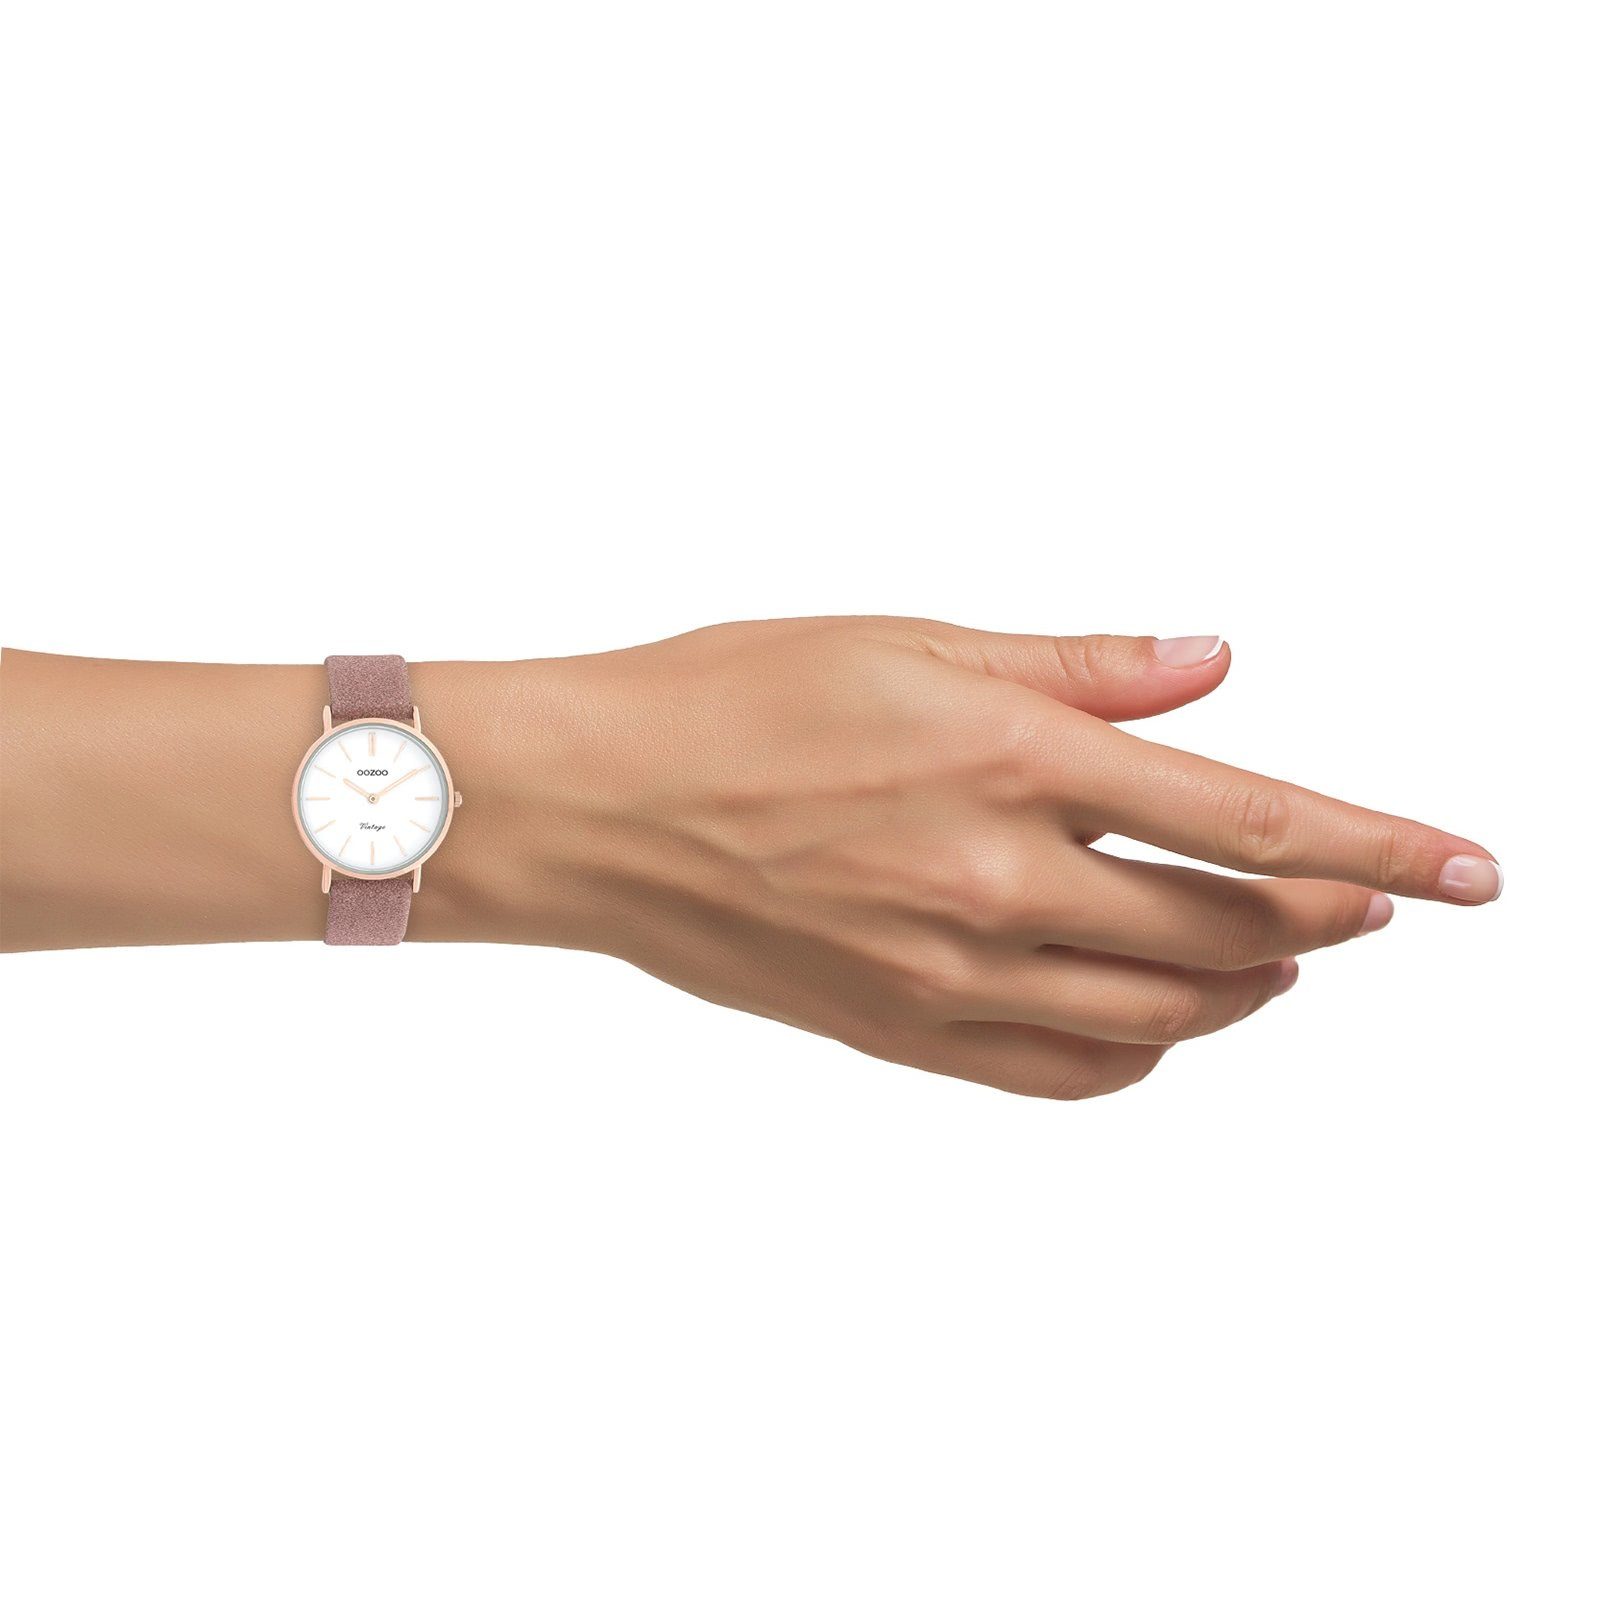 OOZOO Quarzuhr Oozoo Damenuhr mittel Lederarmband, (ca. Damen 32mm) Analog, Armbanduhr rund, Elegant-Style rosa